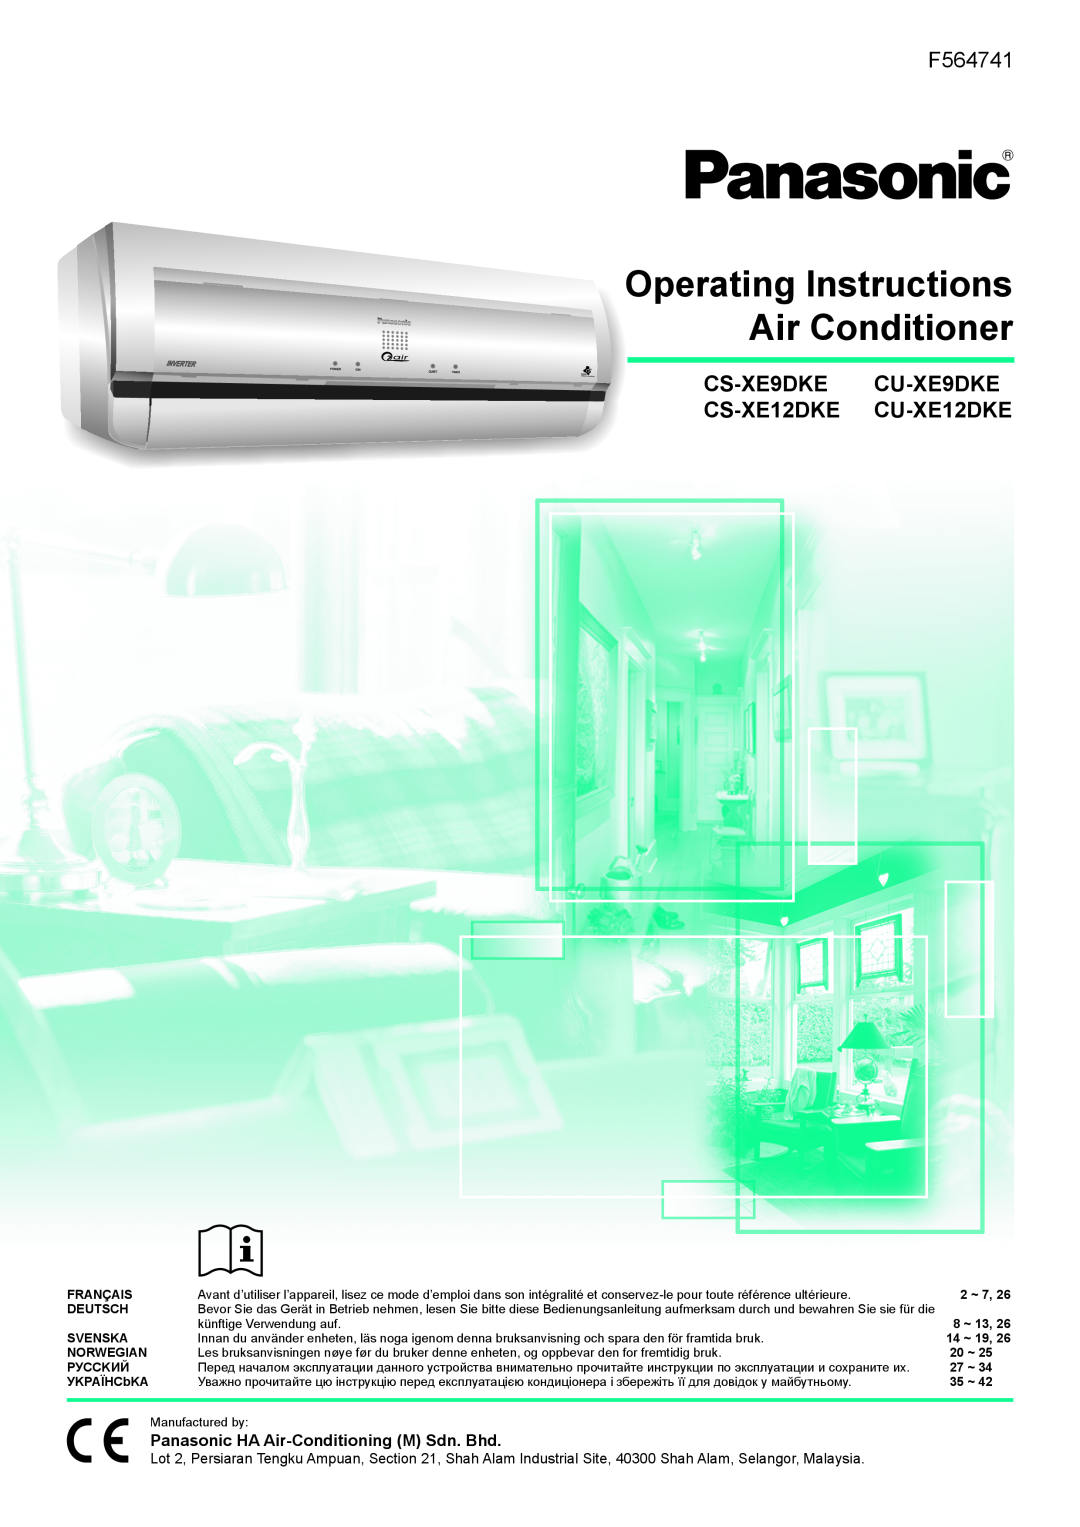 Panasonic operating instructions F564741, CS-XE9DKE CU-XE9DKE CS-XE12DKE CU-XE12DKE 